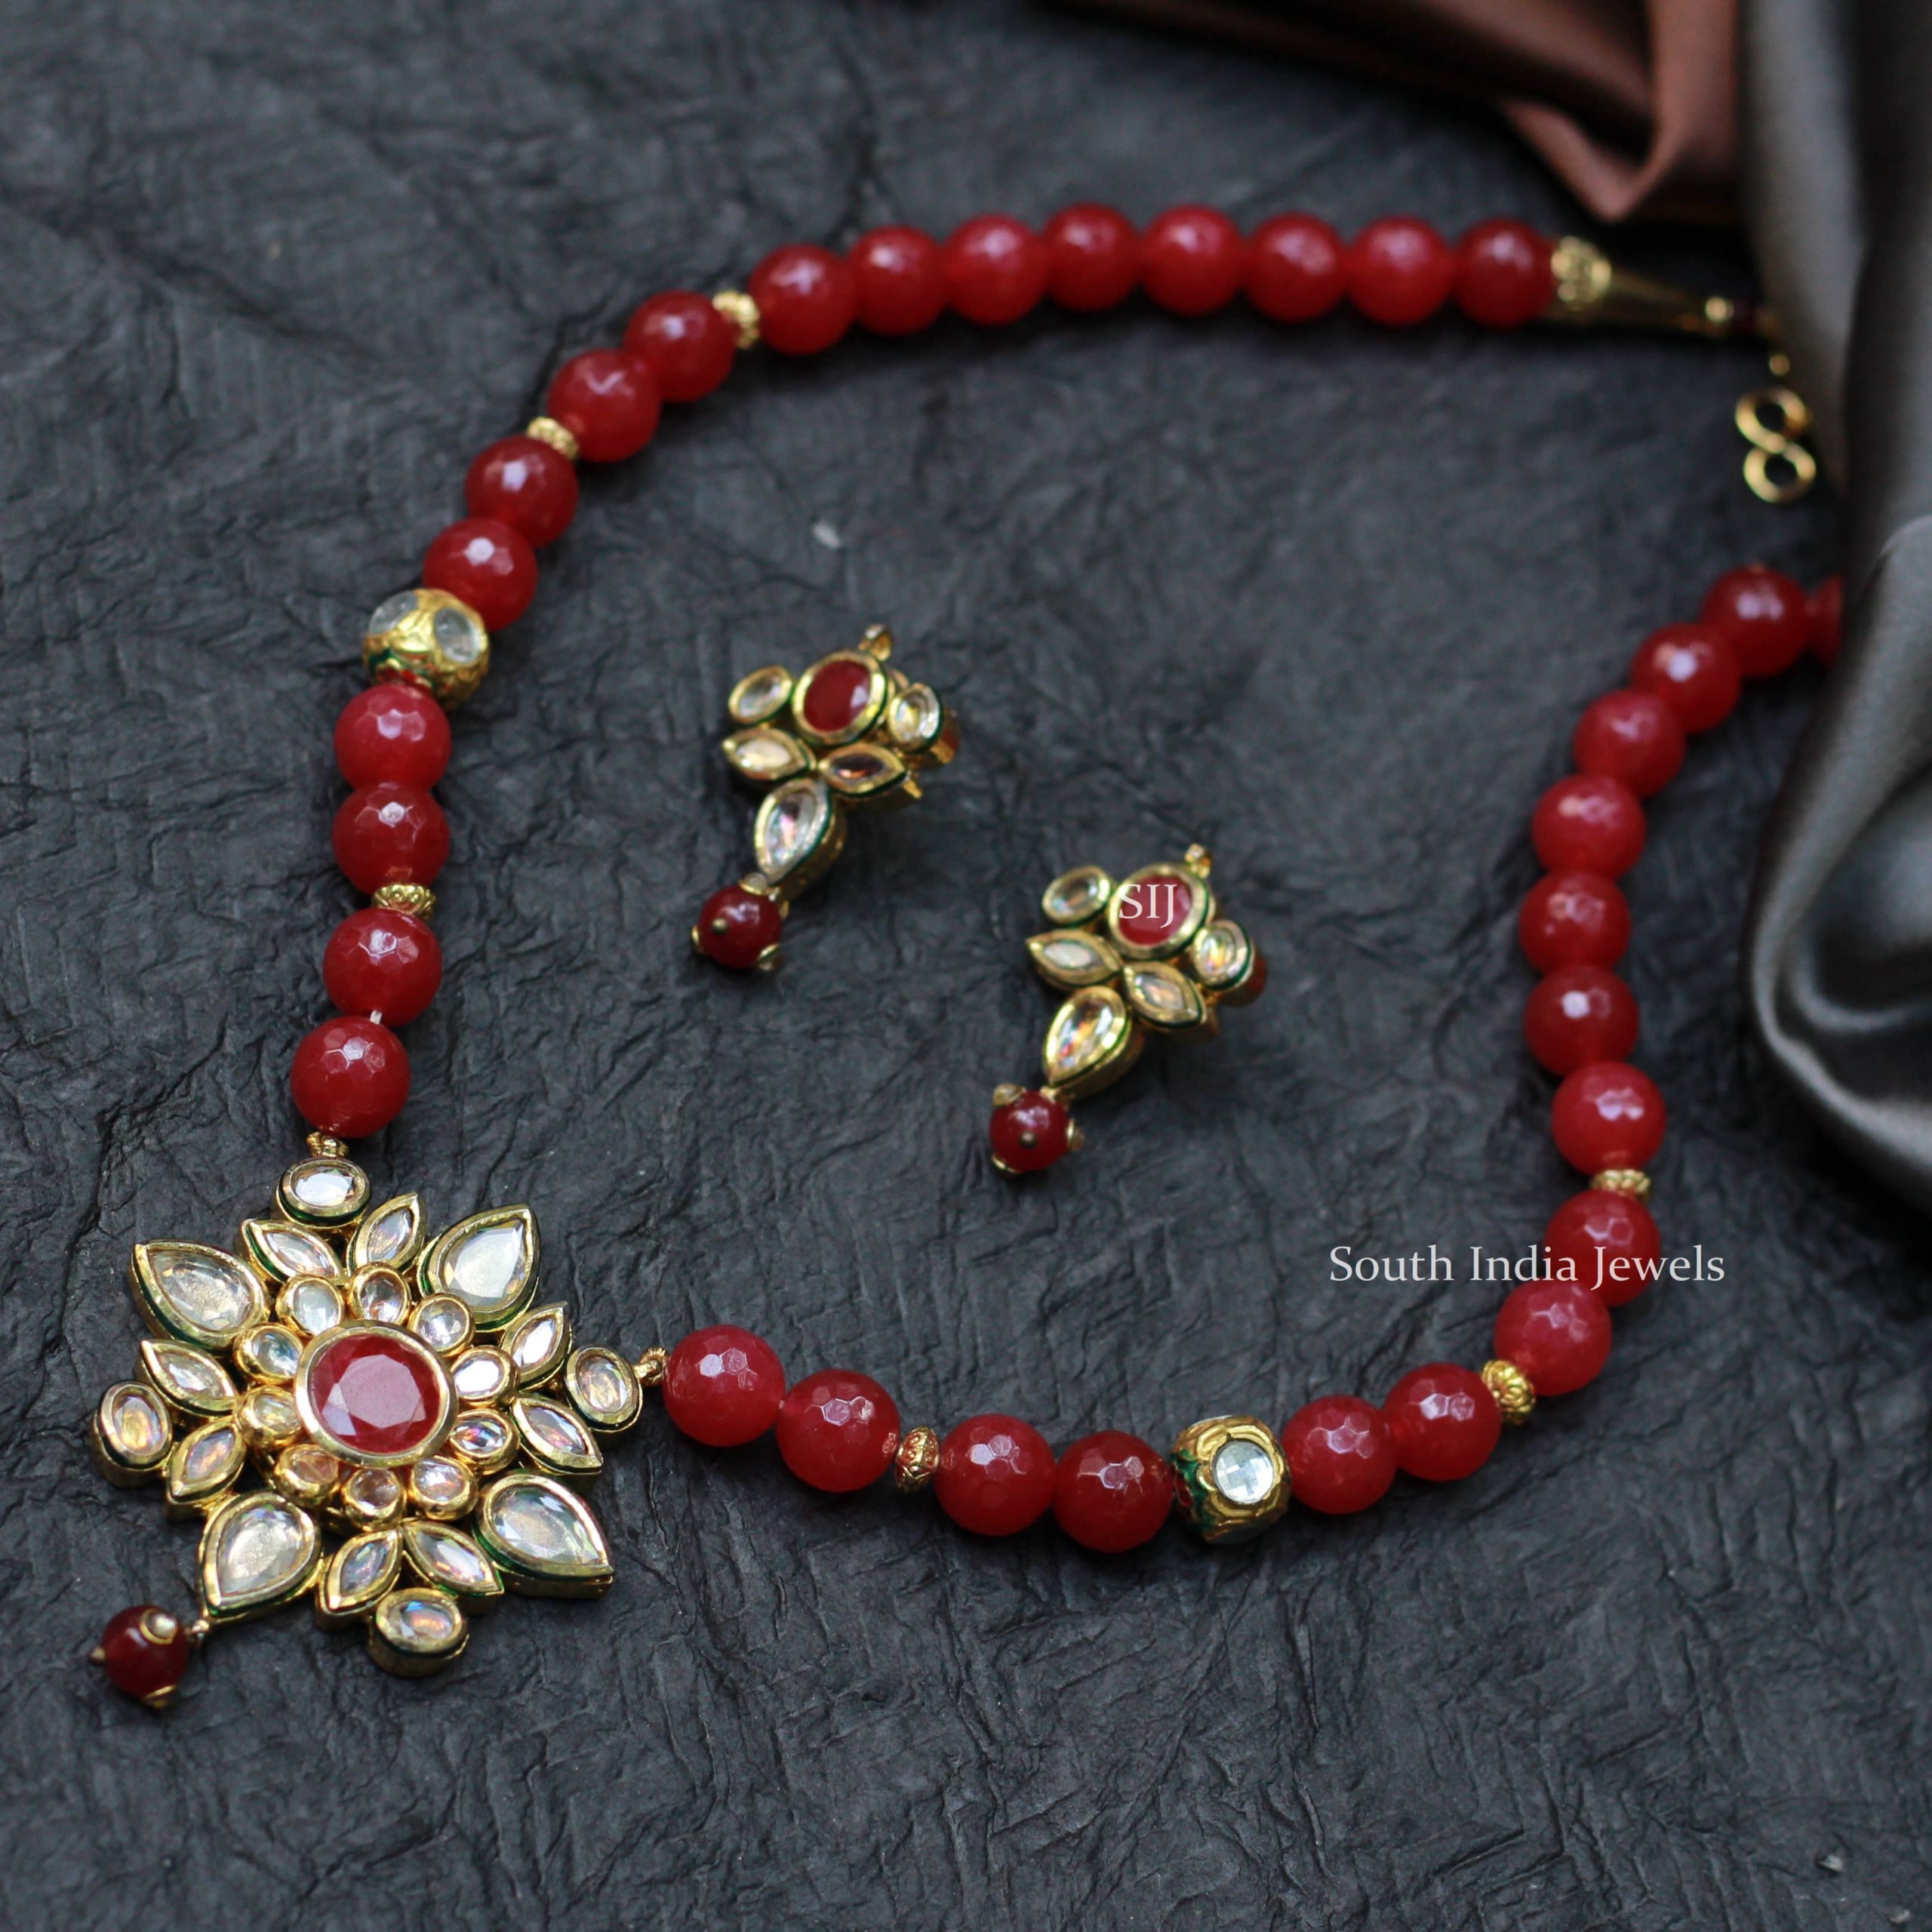 Kundan Stones Necklace - South India Jewels